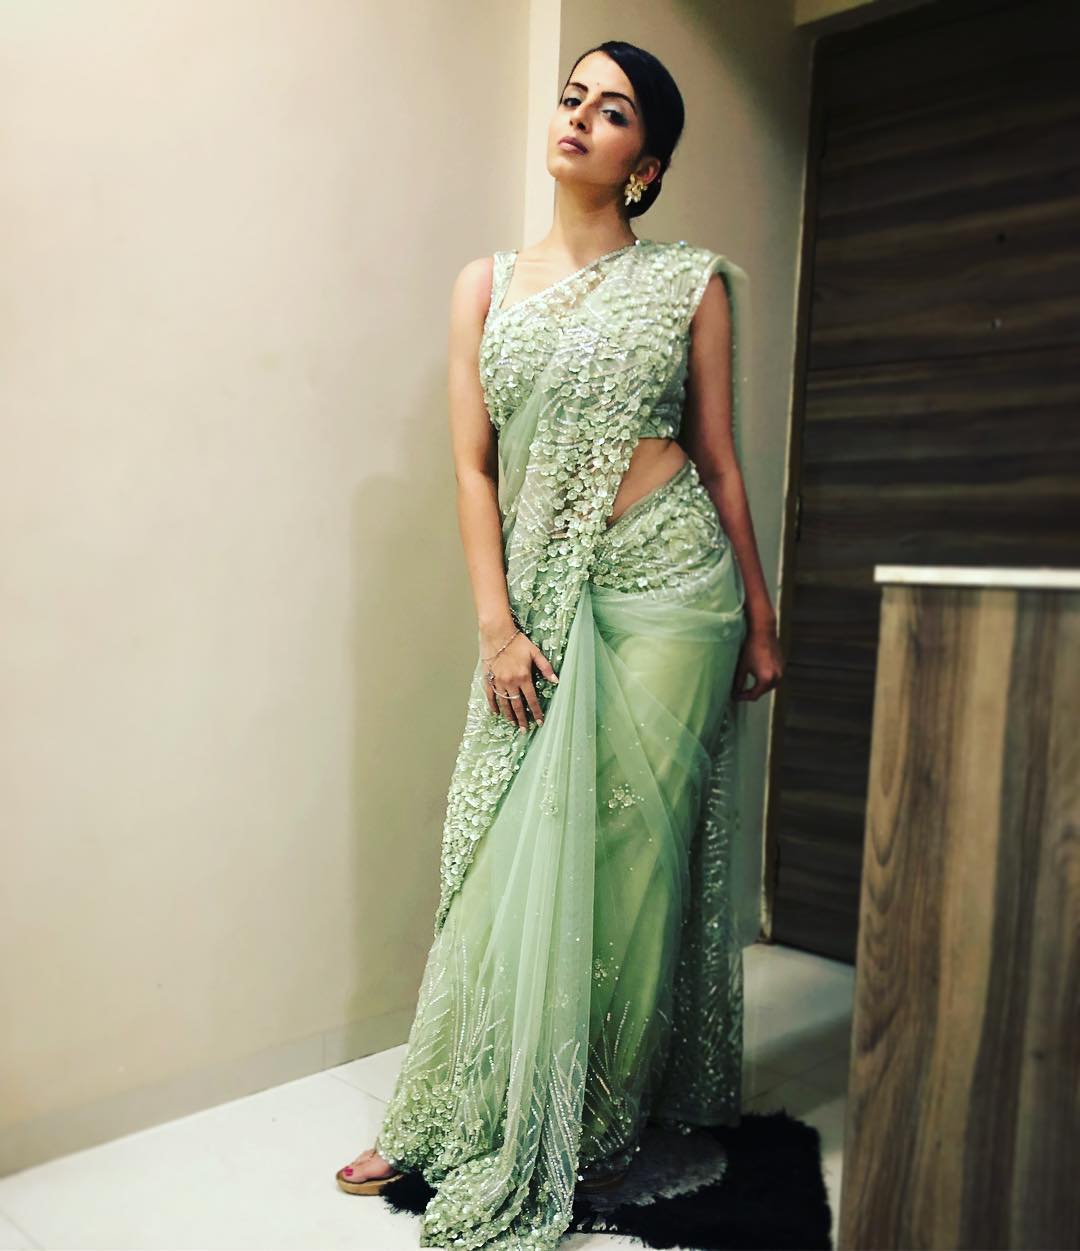 Surbhi Jyoti, Jennifer Winget And Shrenu Parikh's Glamorous Look In Sequin Saree Will Leave You Amazed 6